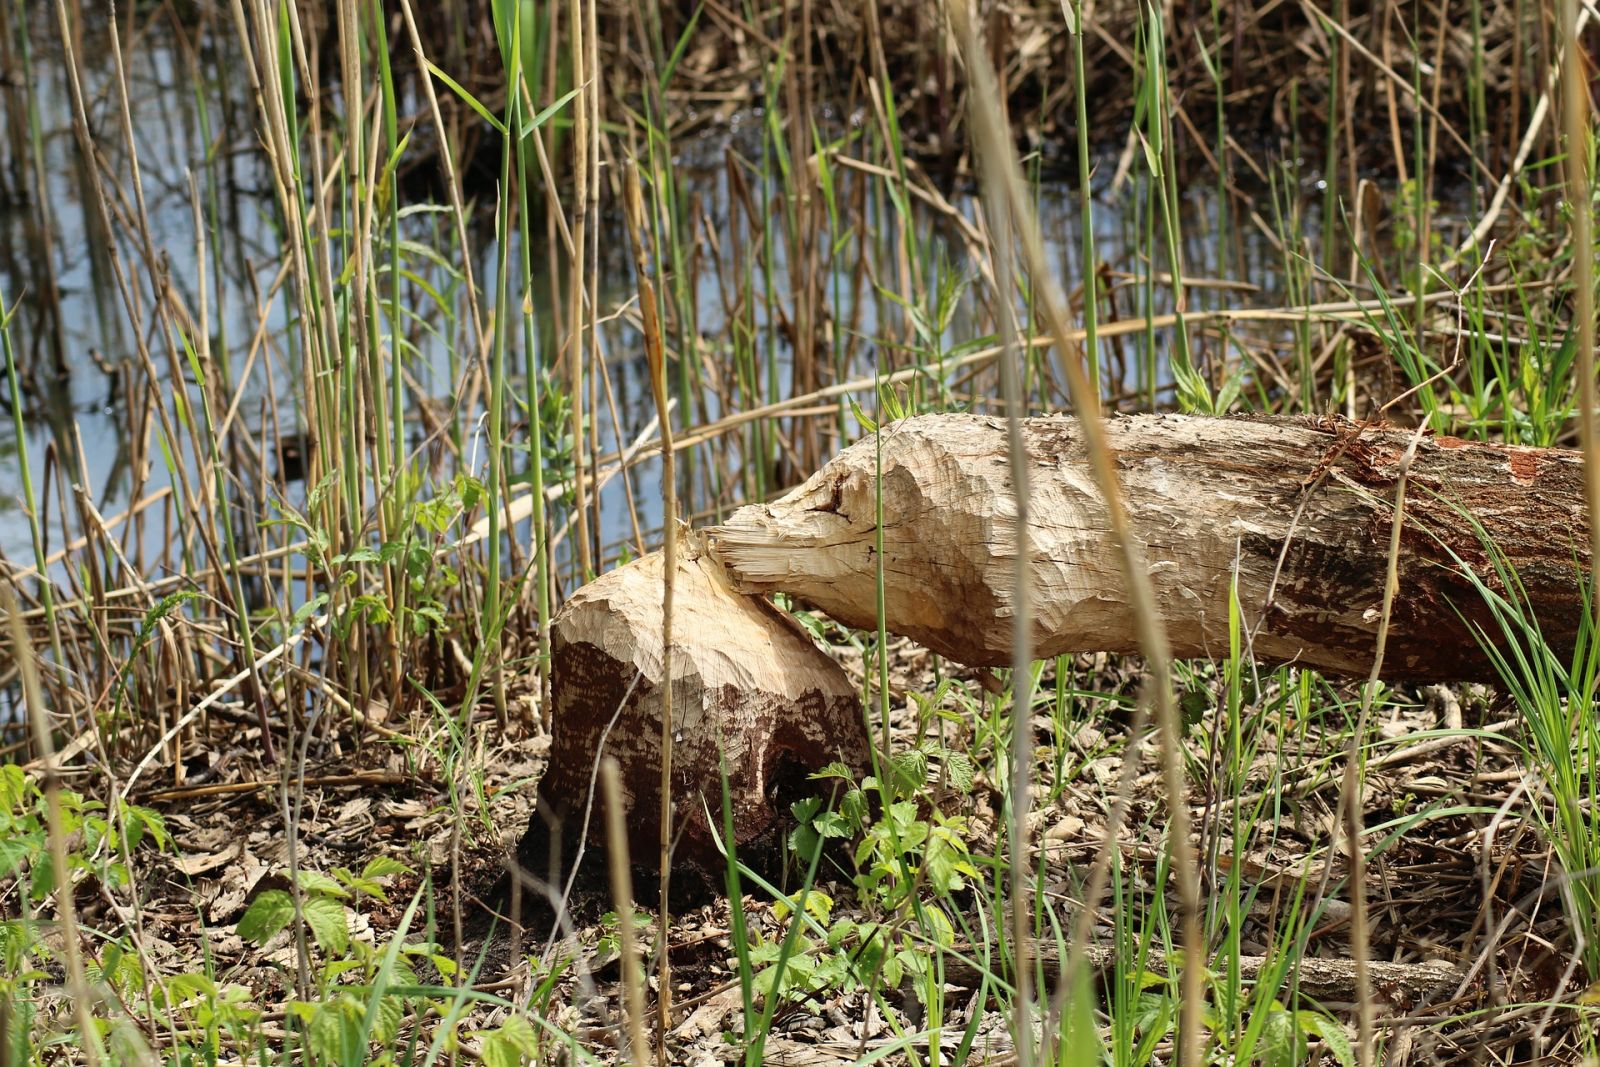 Beavers can transform a landscape